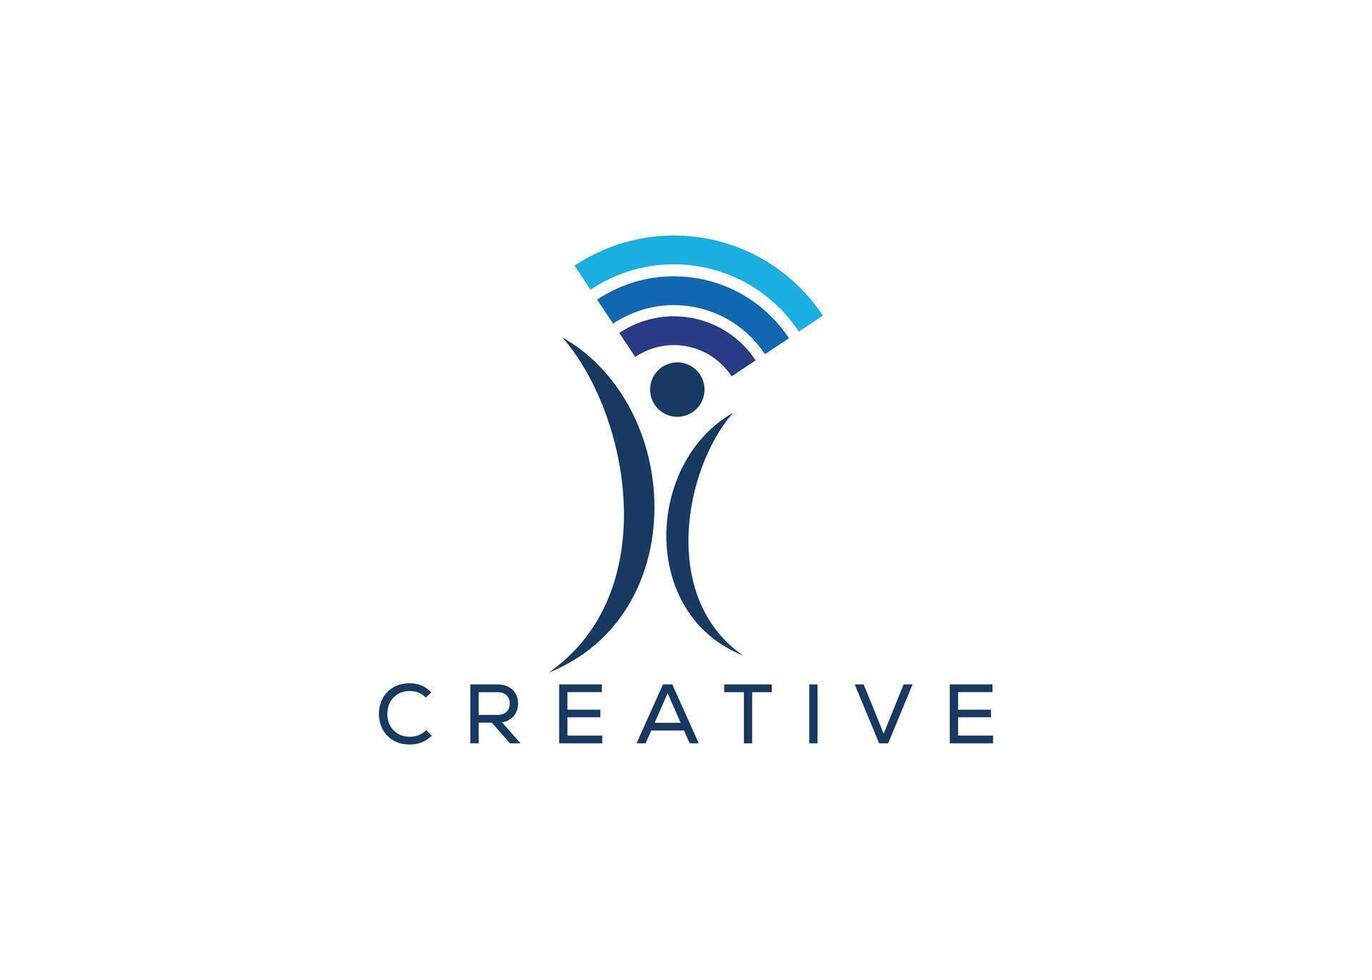 Wi-Fi and Man logo design vector template